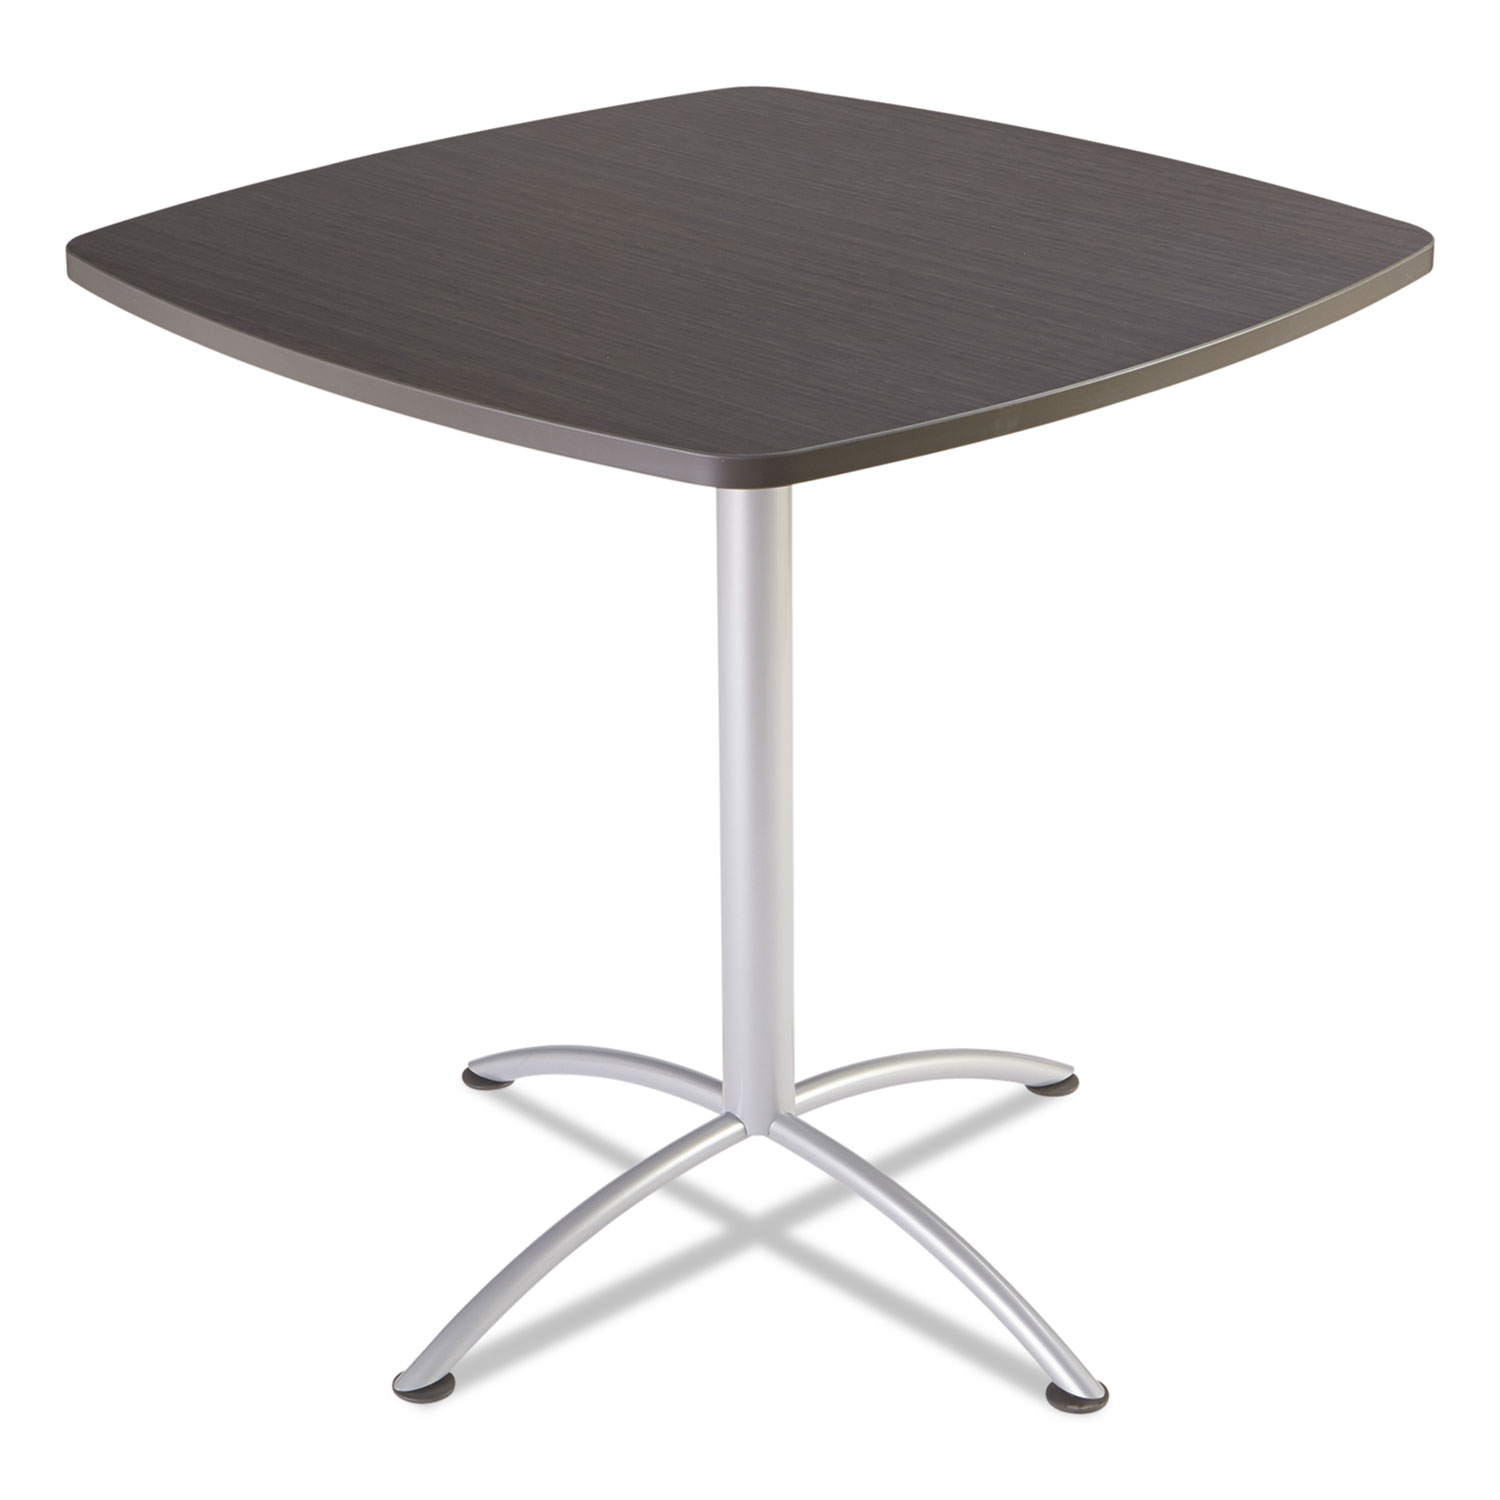  Iceberg 69764 iLand Table, Contour, Square Seated Style, 42 x 42 x 42, Gray Walnut/Silver (ICE69764) 